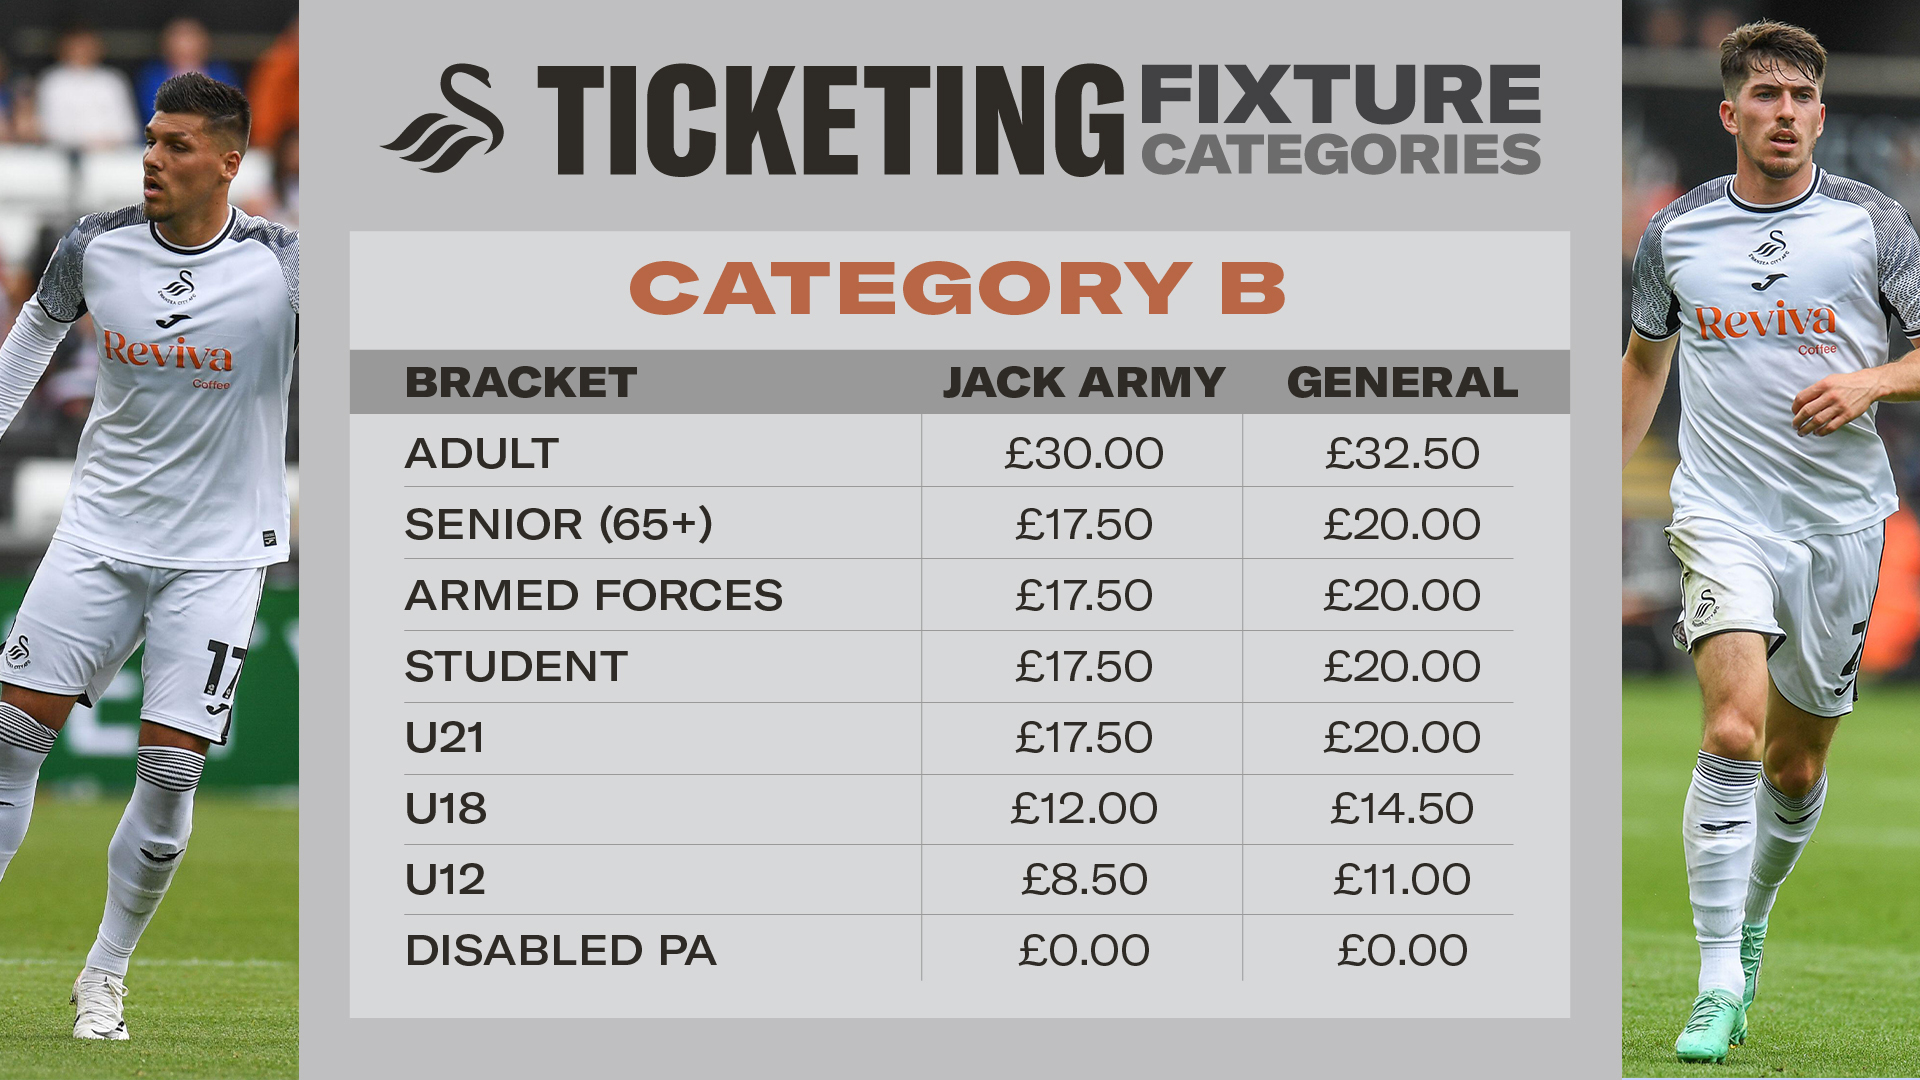 Category B ticketing